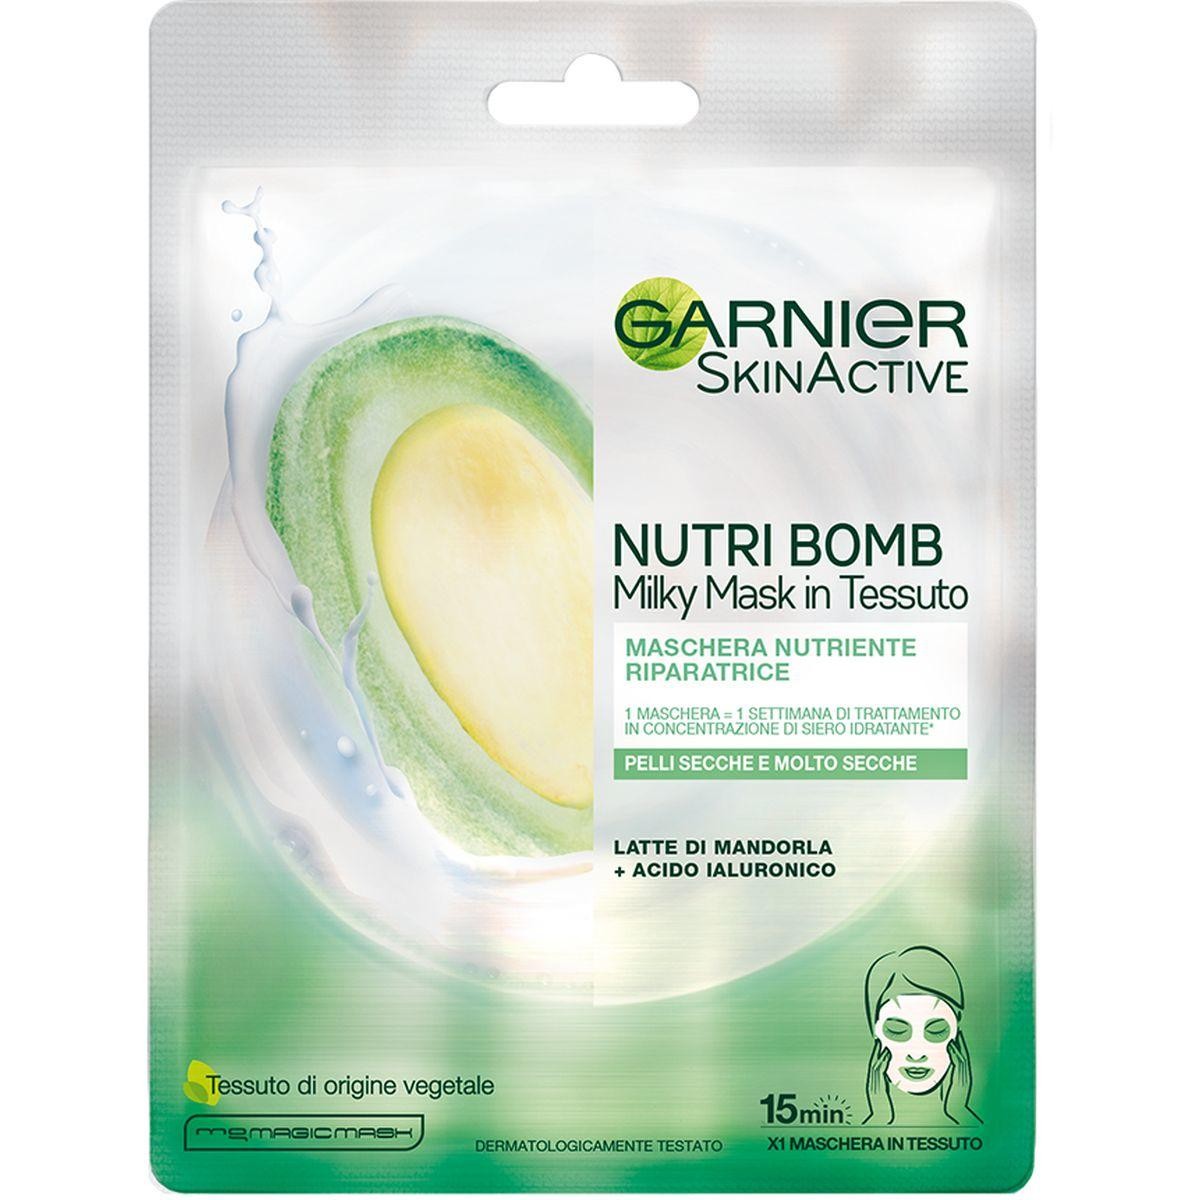 Image of Garnier SkinActive Nutri Bomb Maschera Nutriente Riparatrice